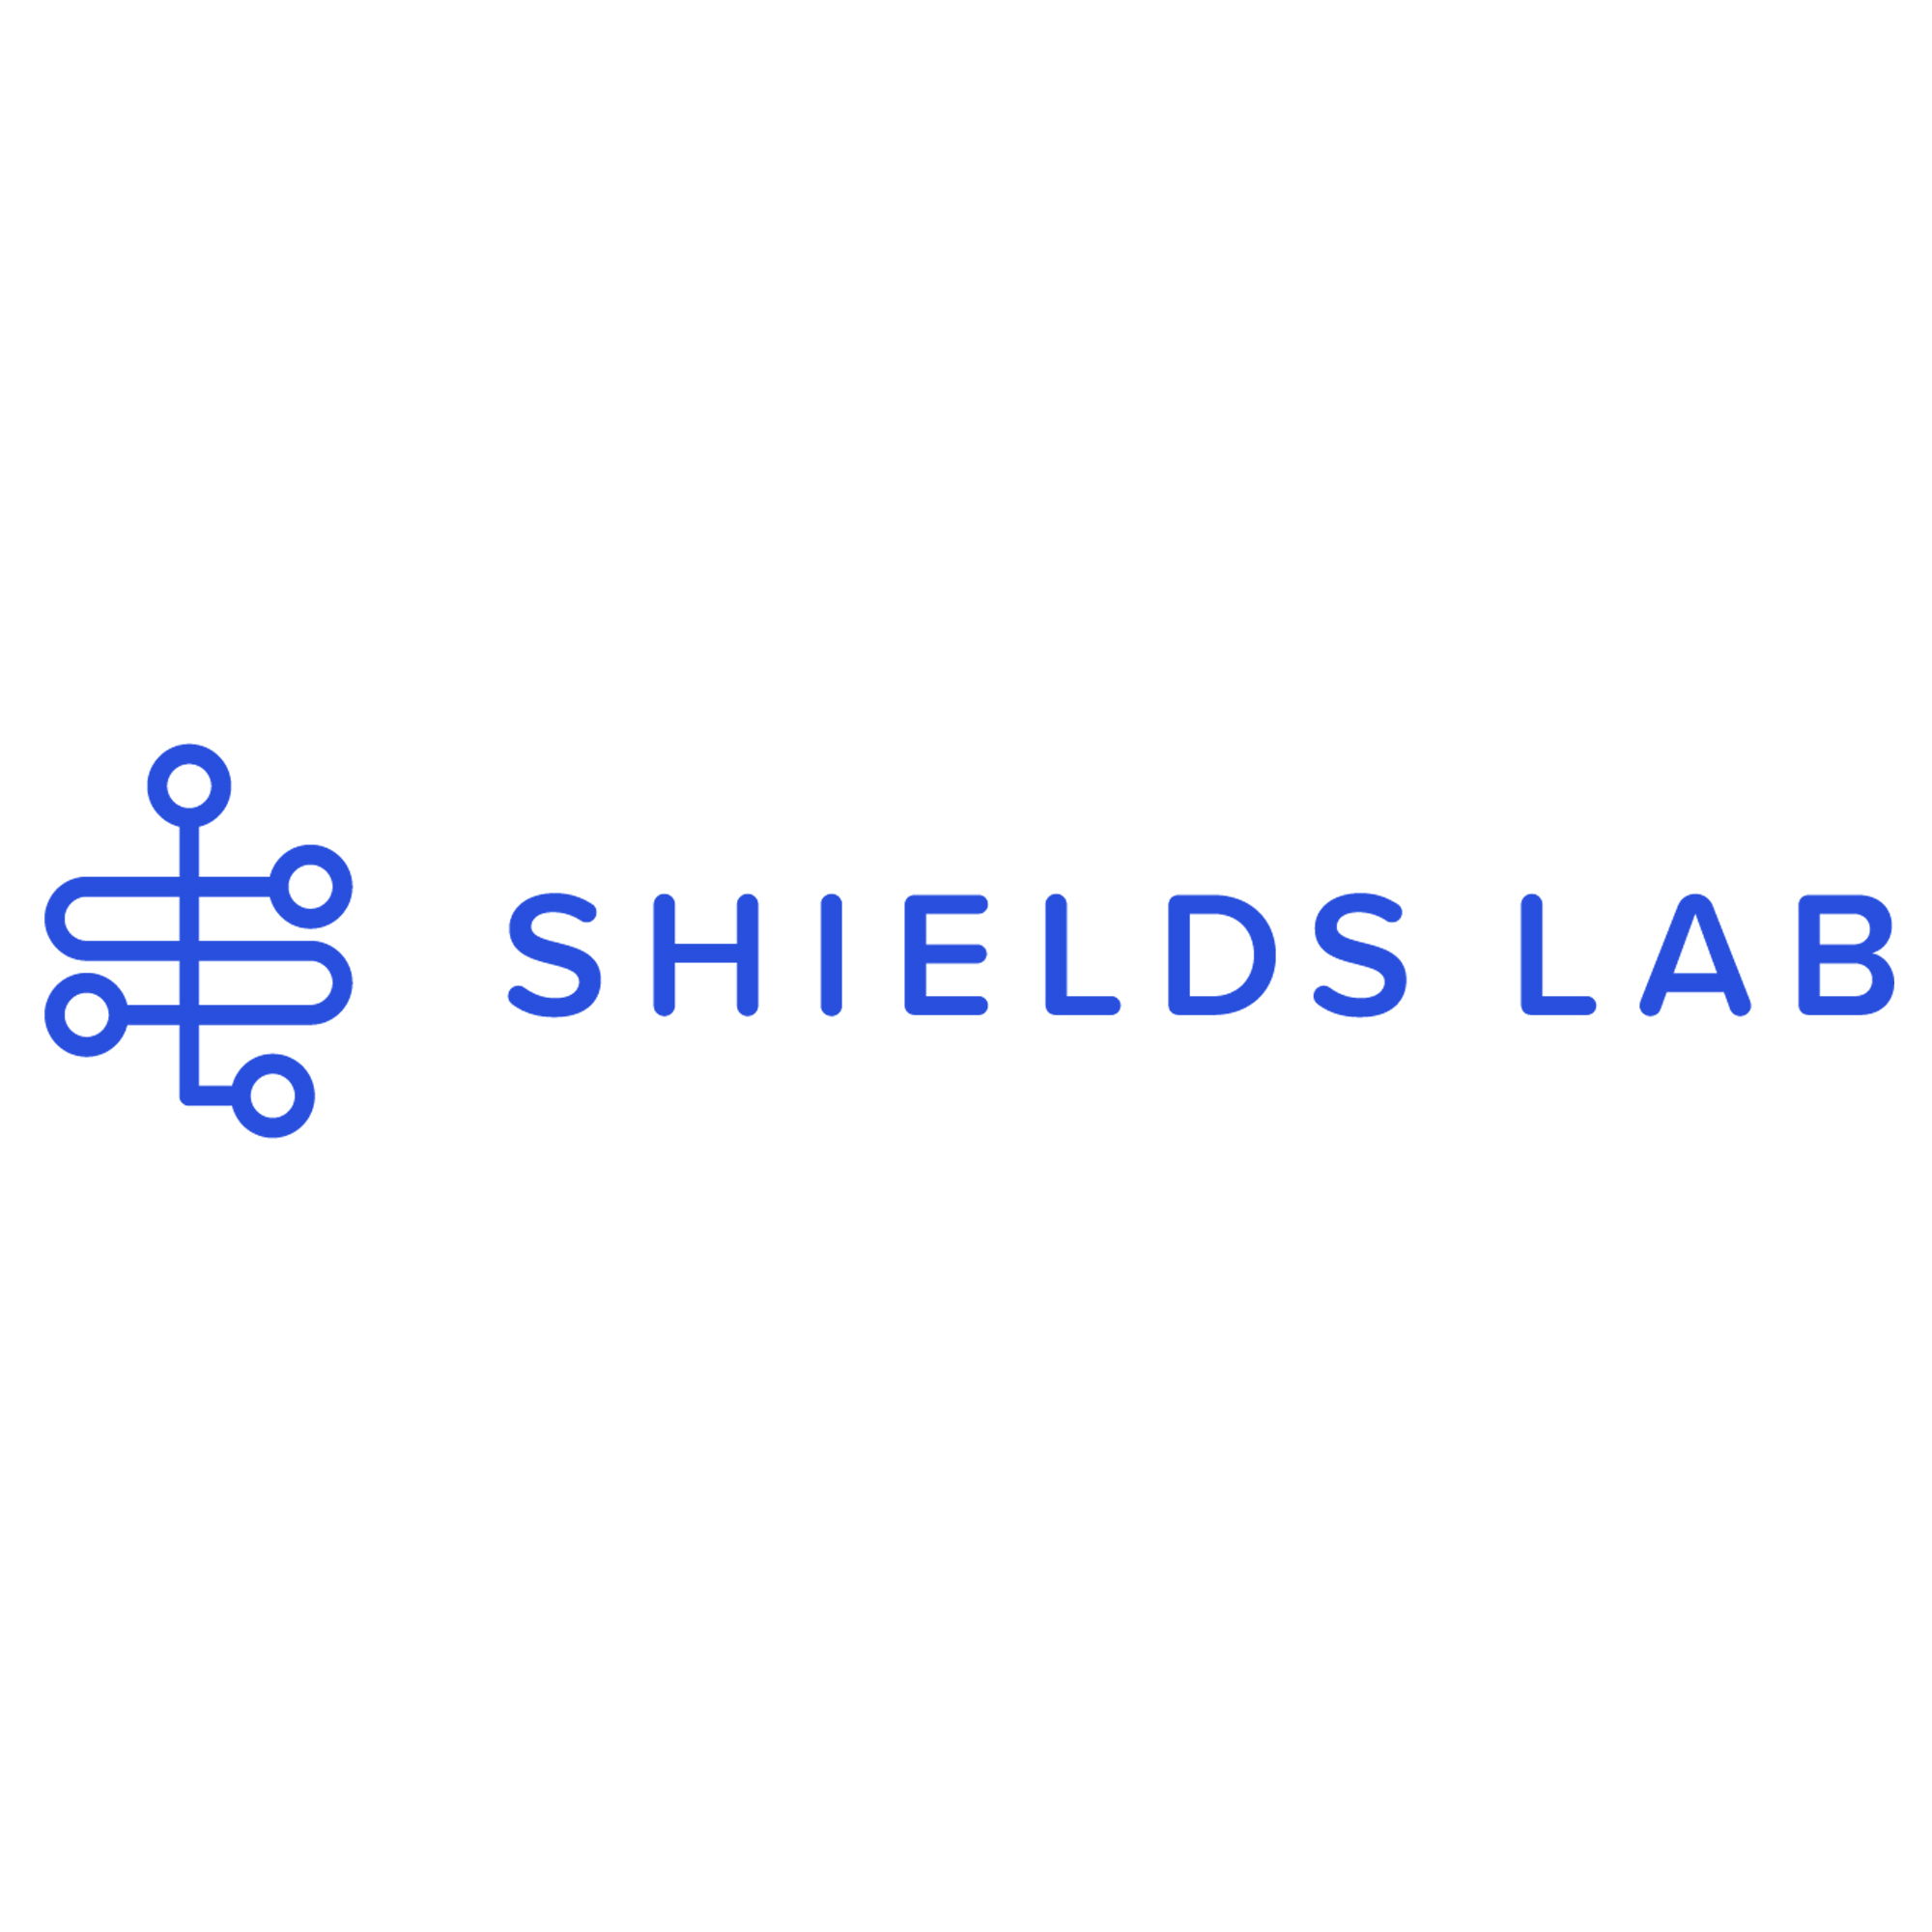 Shields Lab.jpg